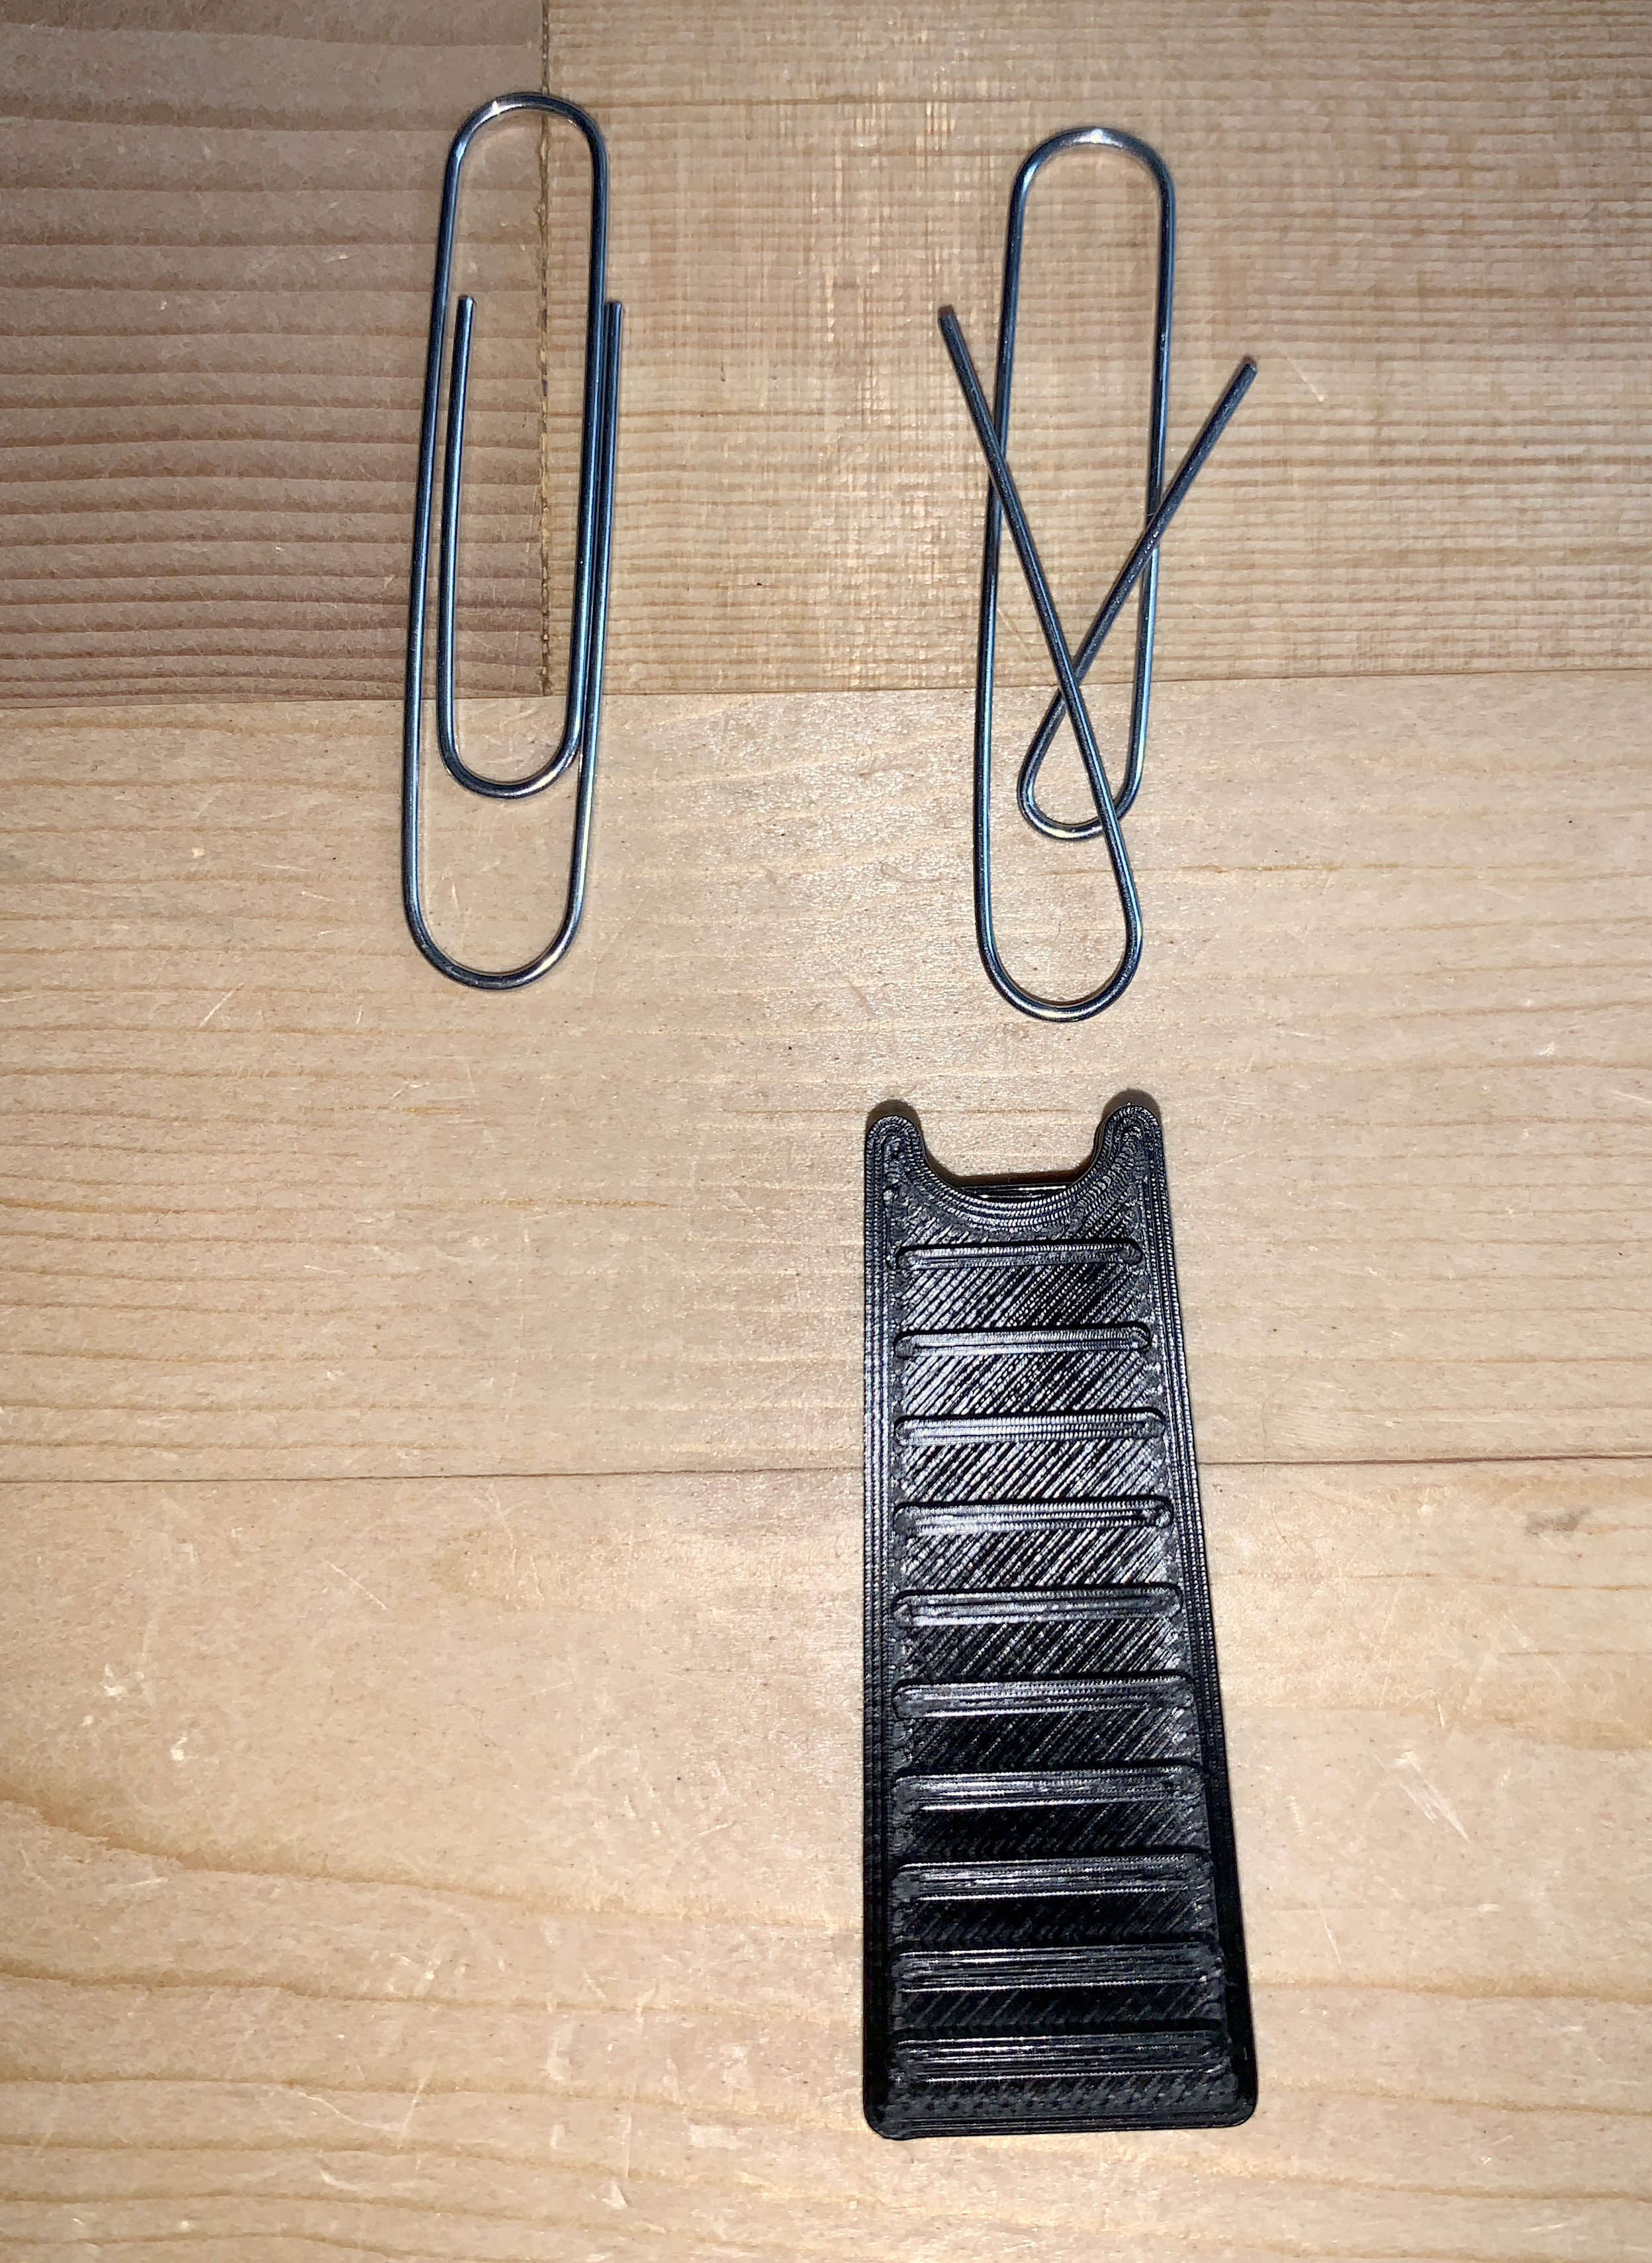 Broken Zipper Pull Replacement by Rifraf